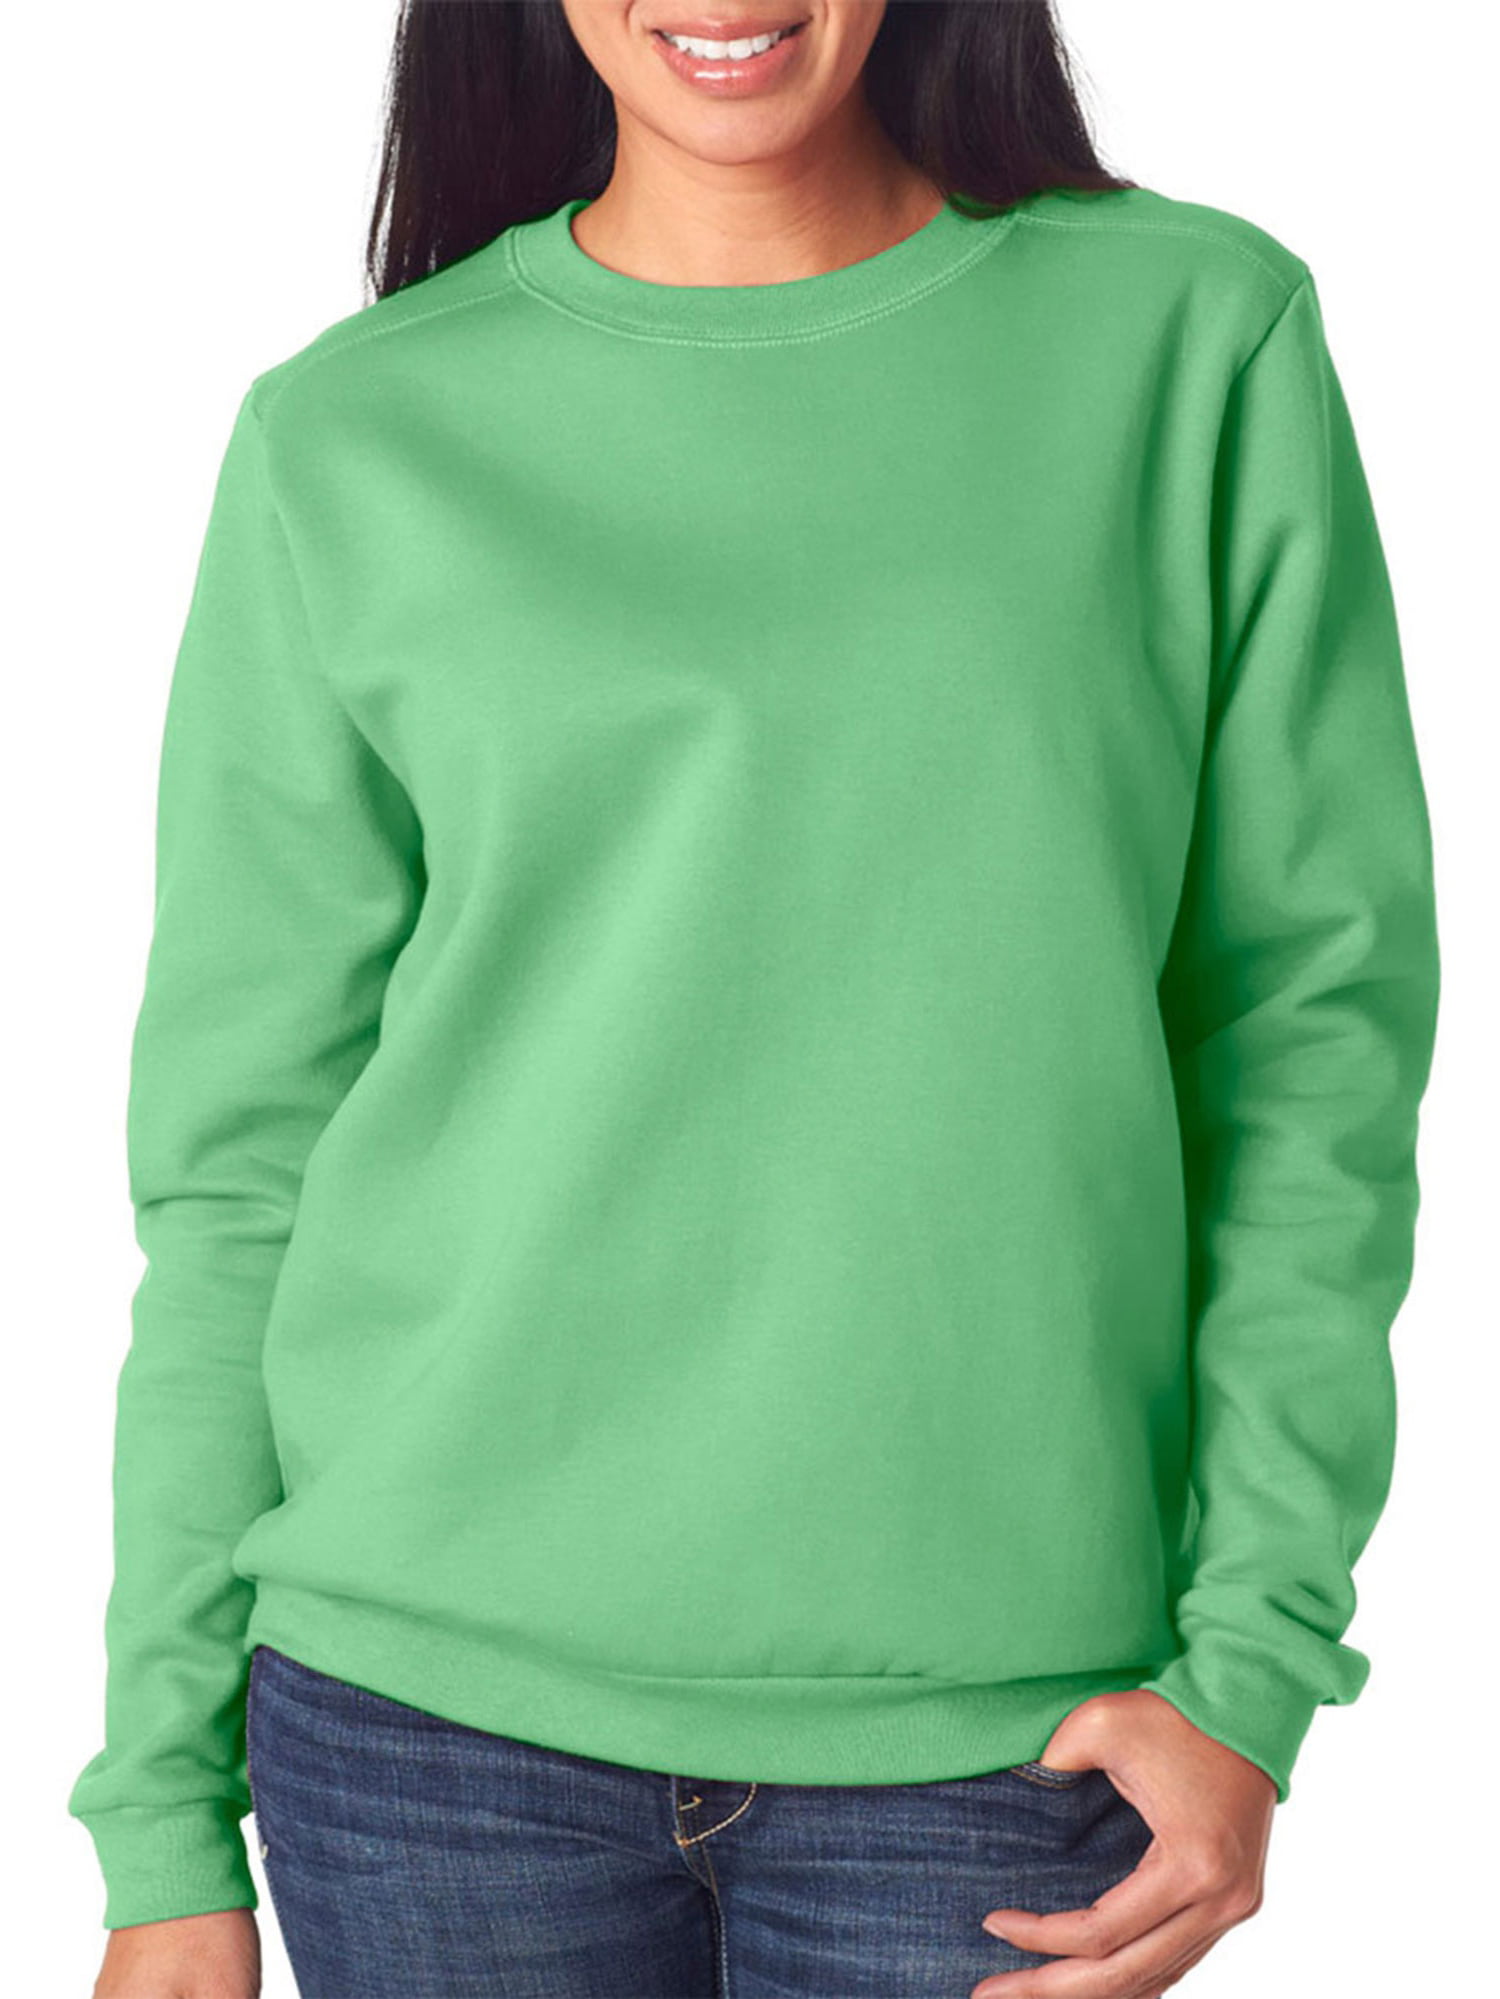 Anvil - Anvil Womens’ Fashion Crew Neck Sweatshirt, Green Apple, 2XL